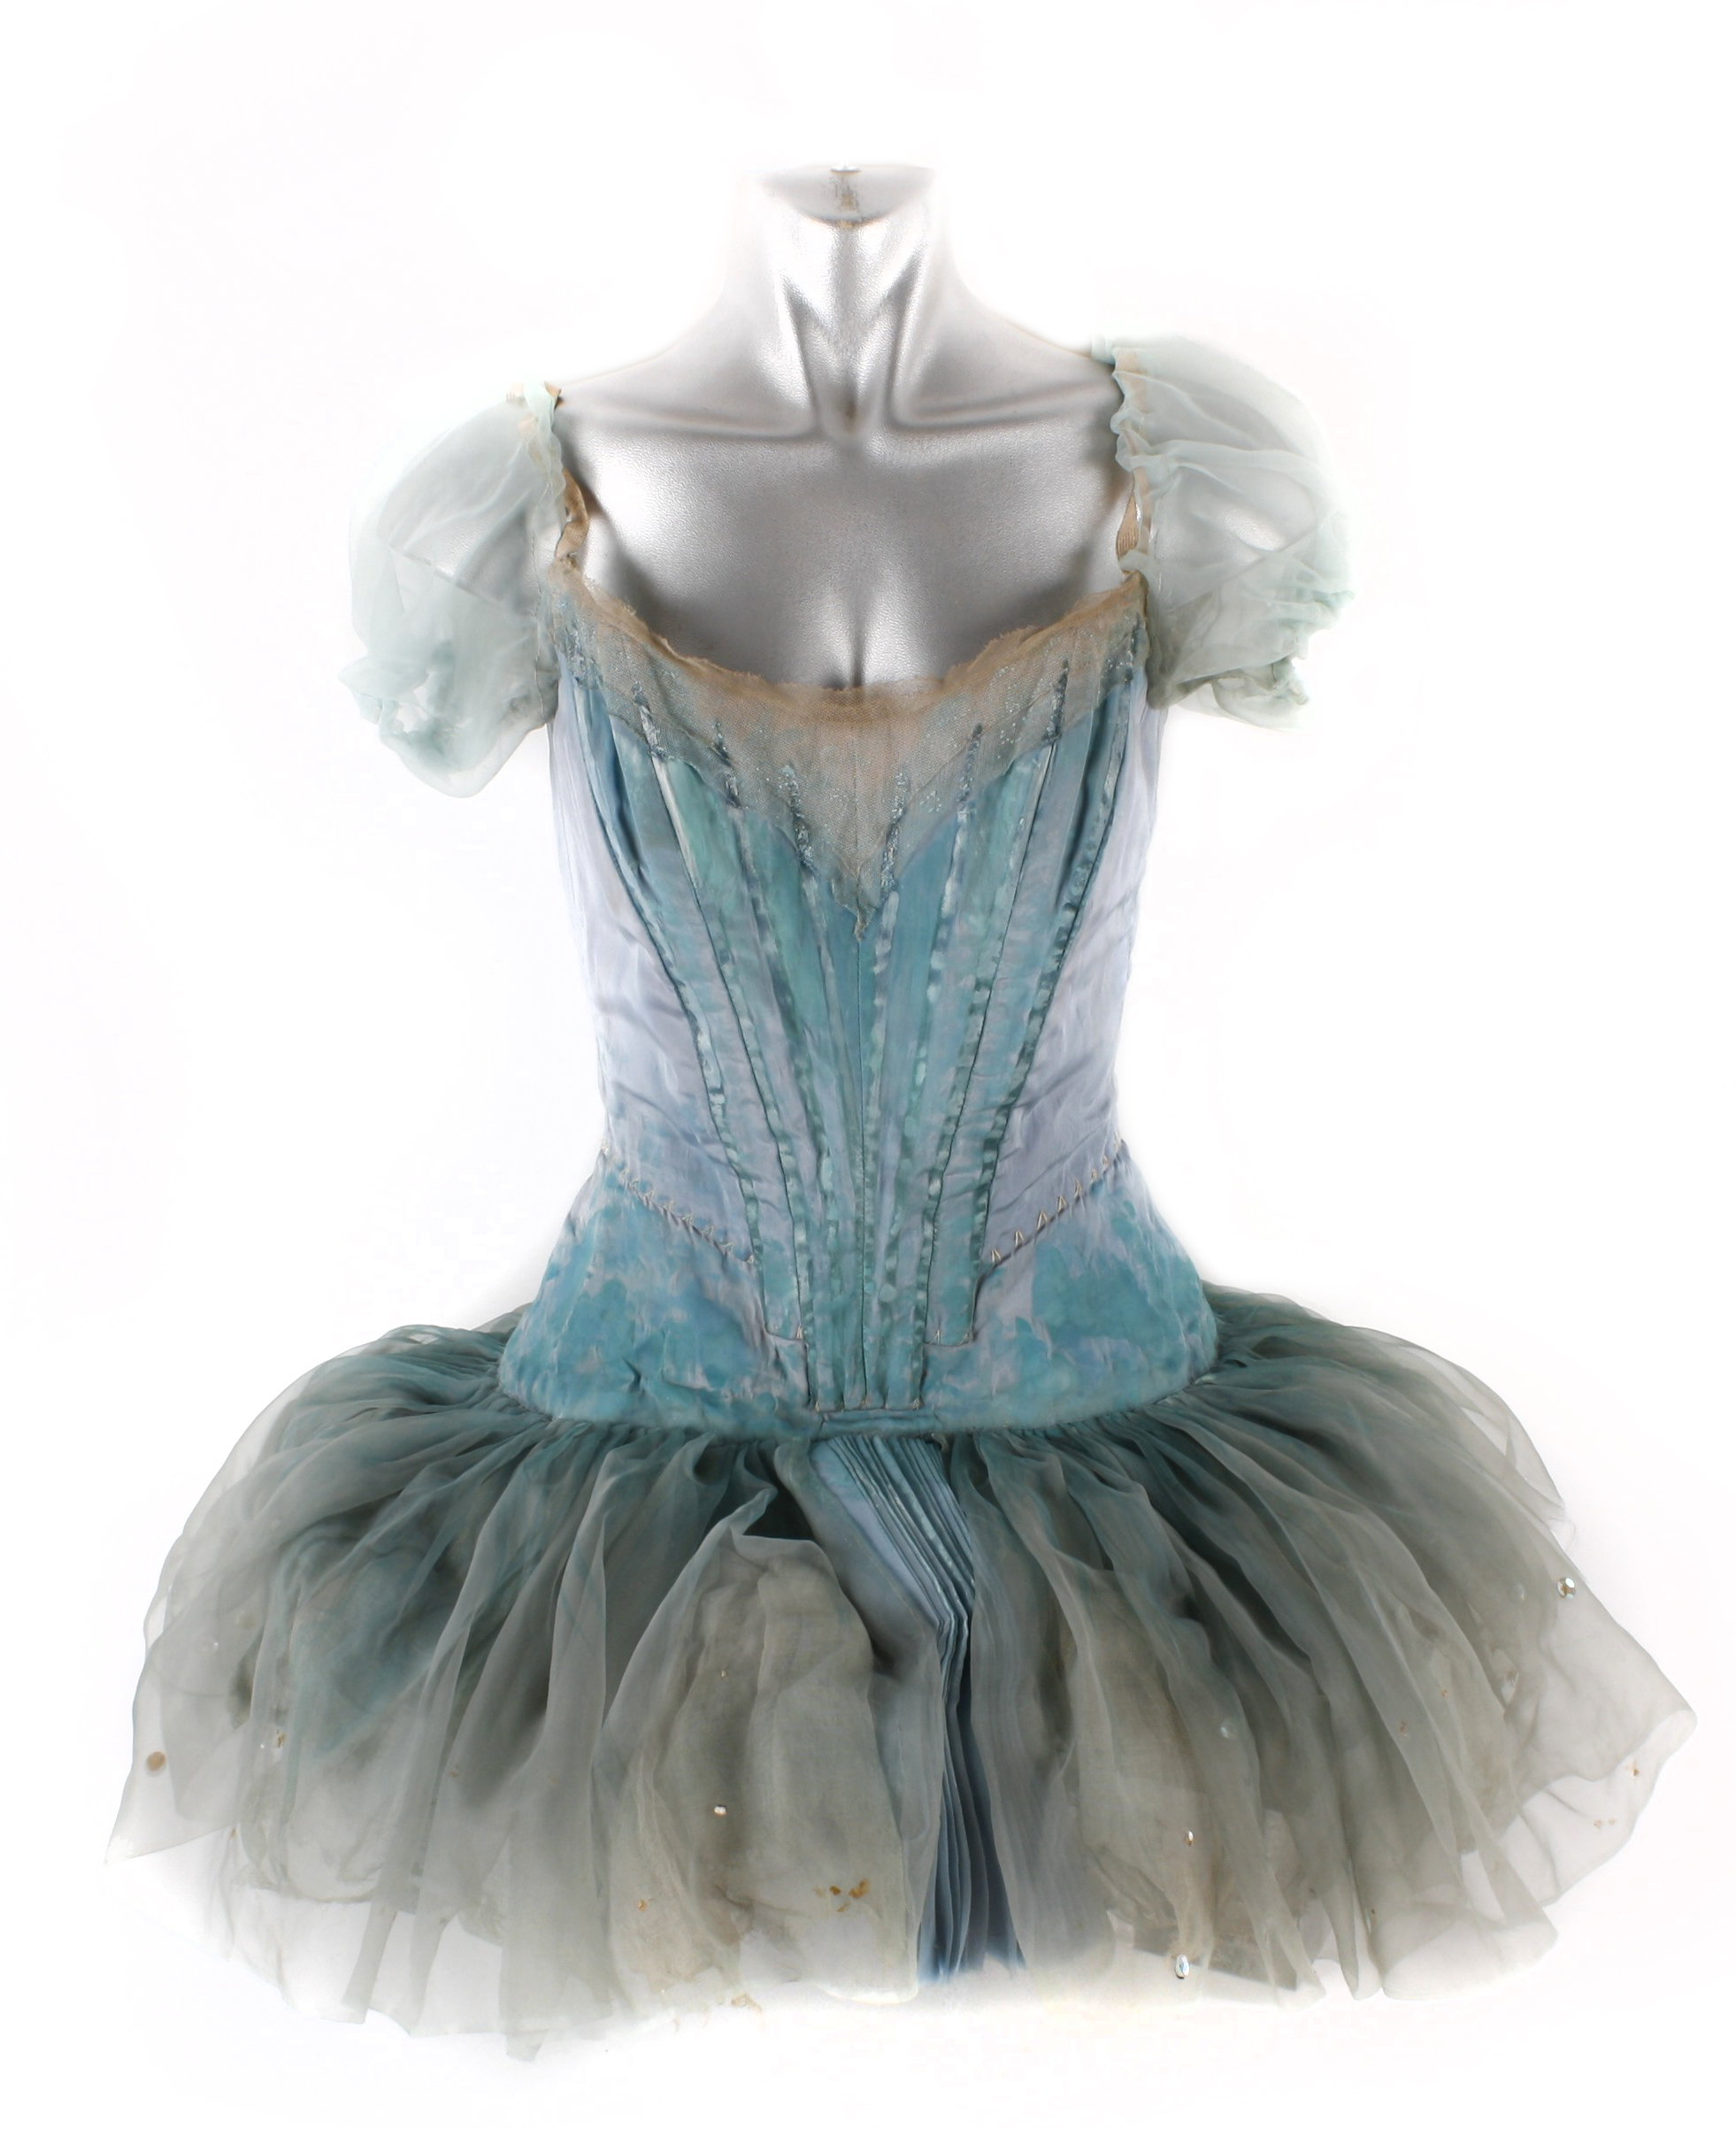 A ballet tutu dating from the 1950-1960's, the handwritten label inside reads 'Margot Fonteyn,